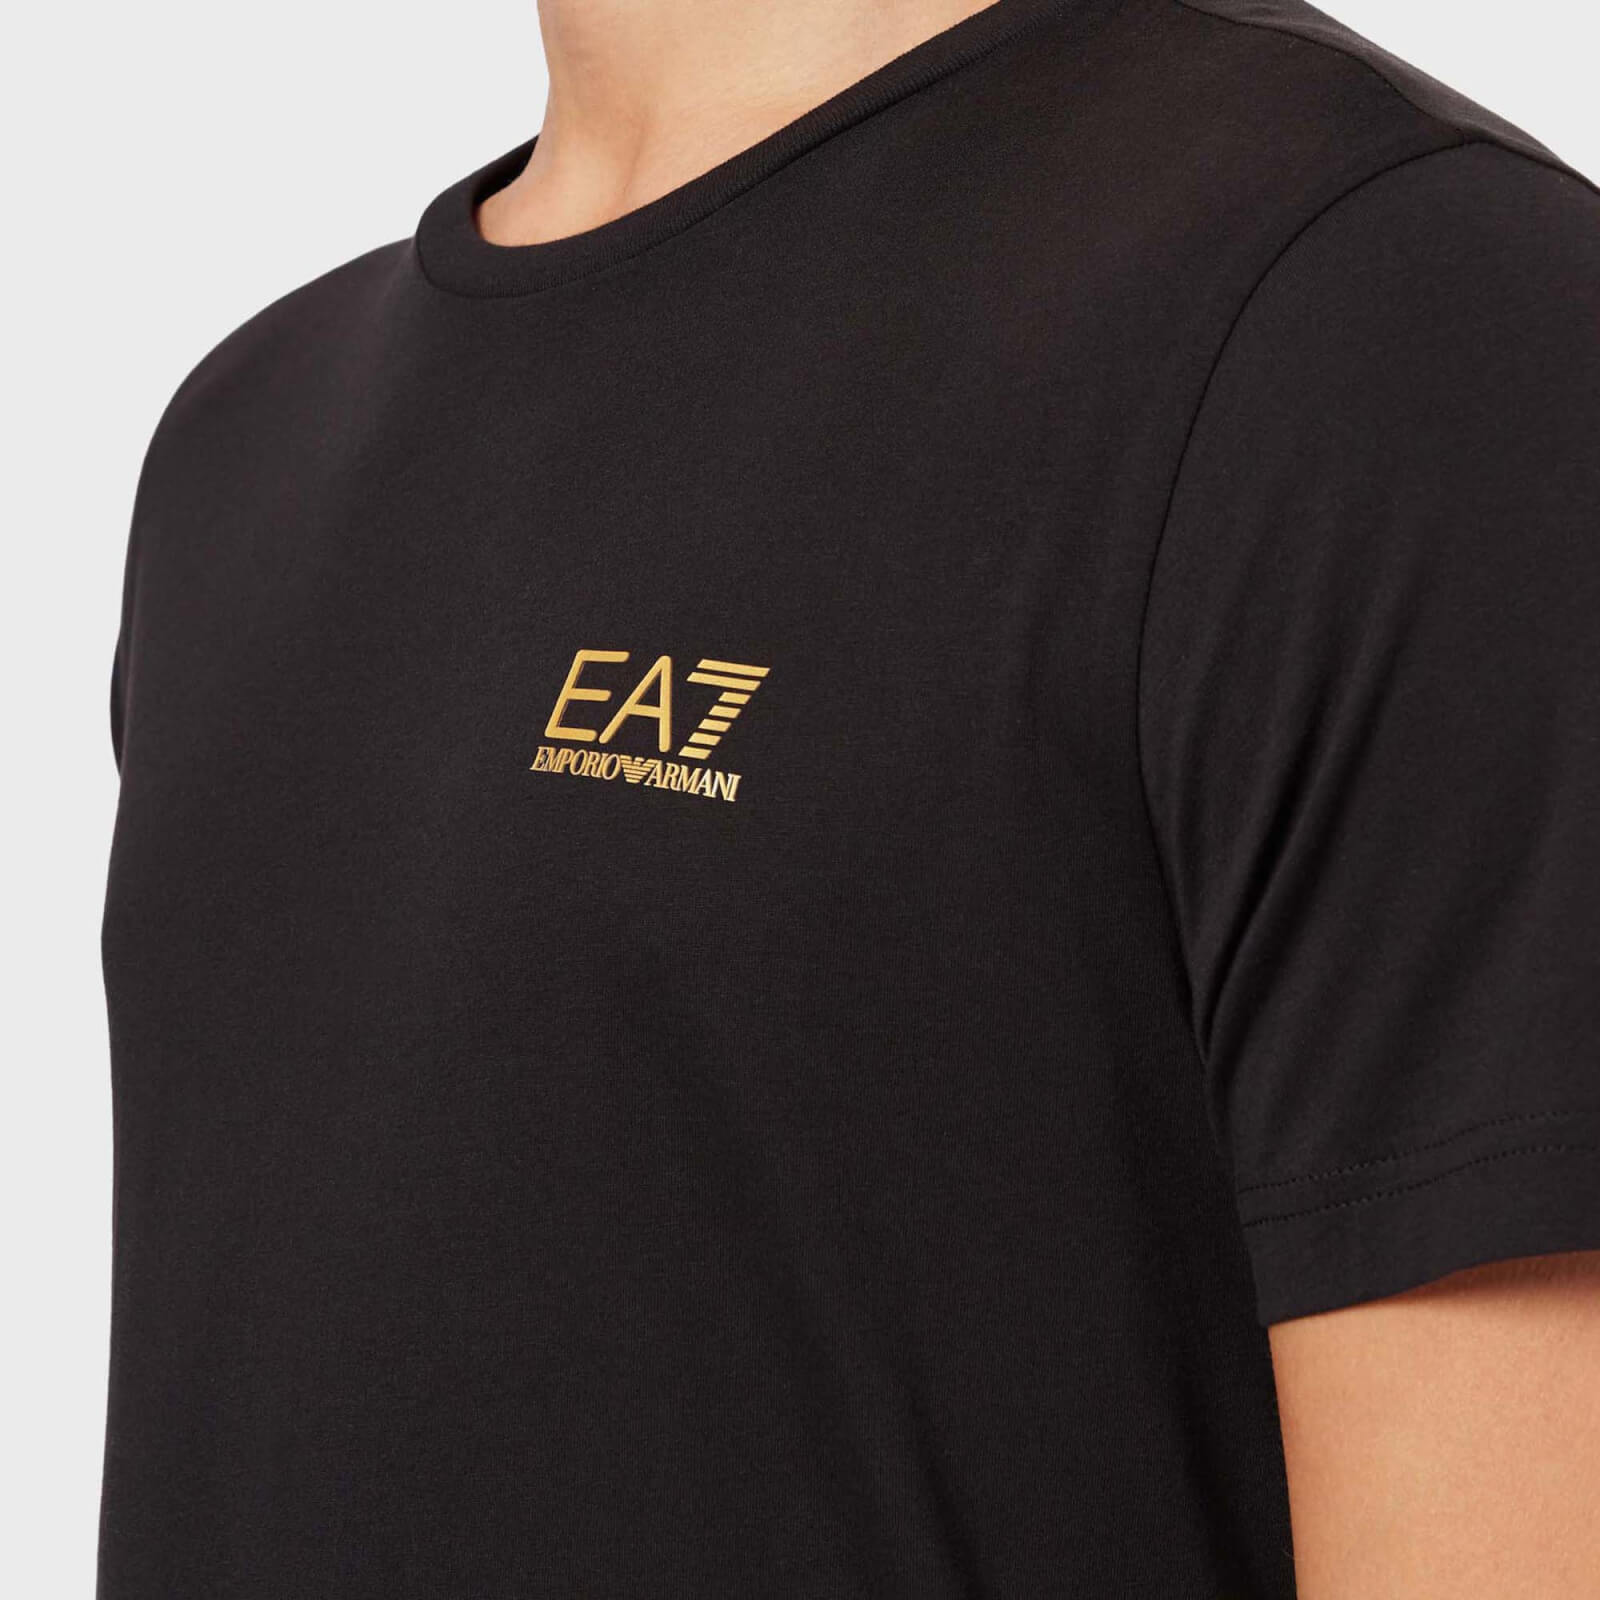 ea7 men's core identity t-shirt - black/gold - m